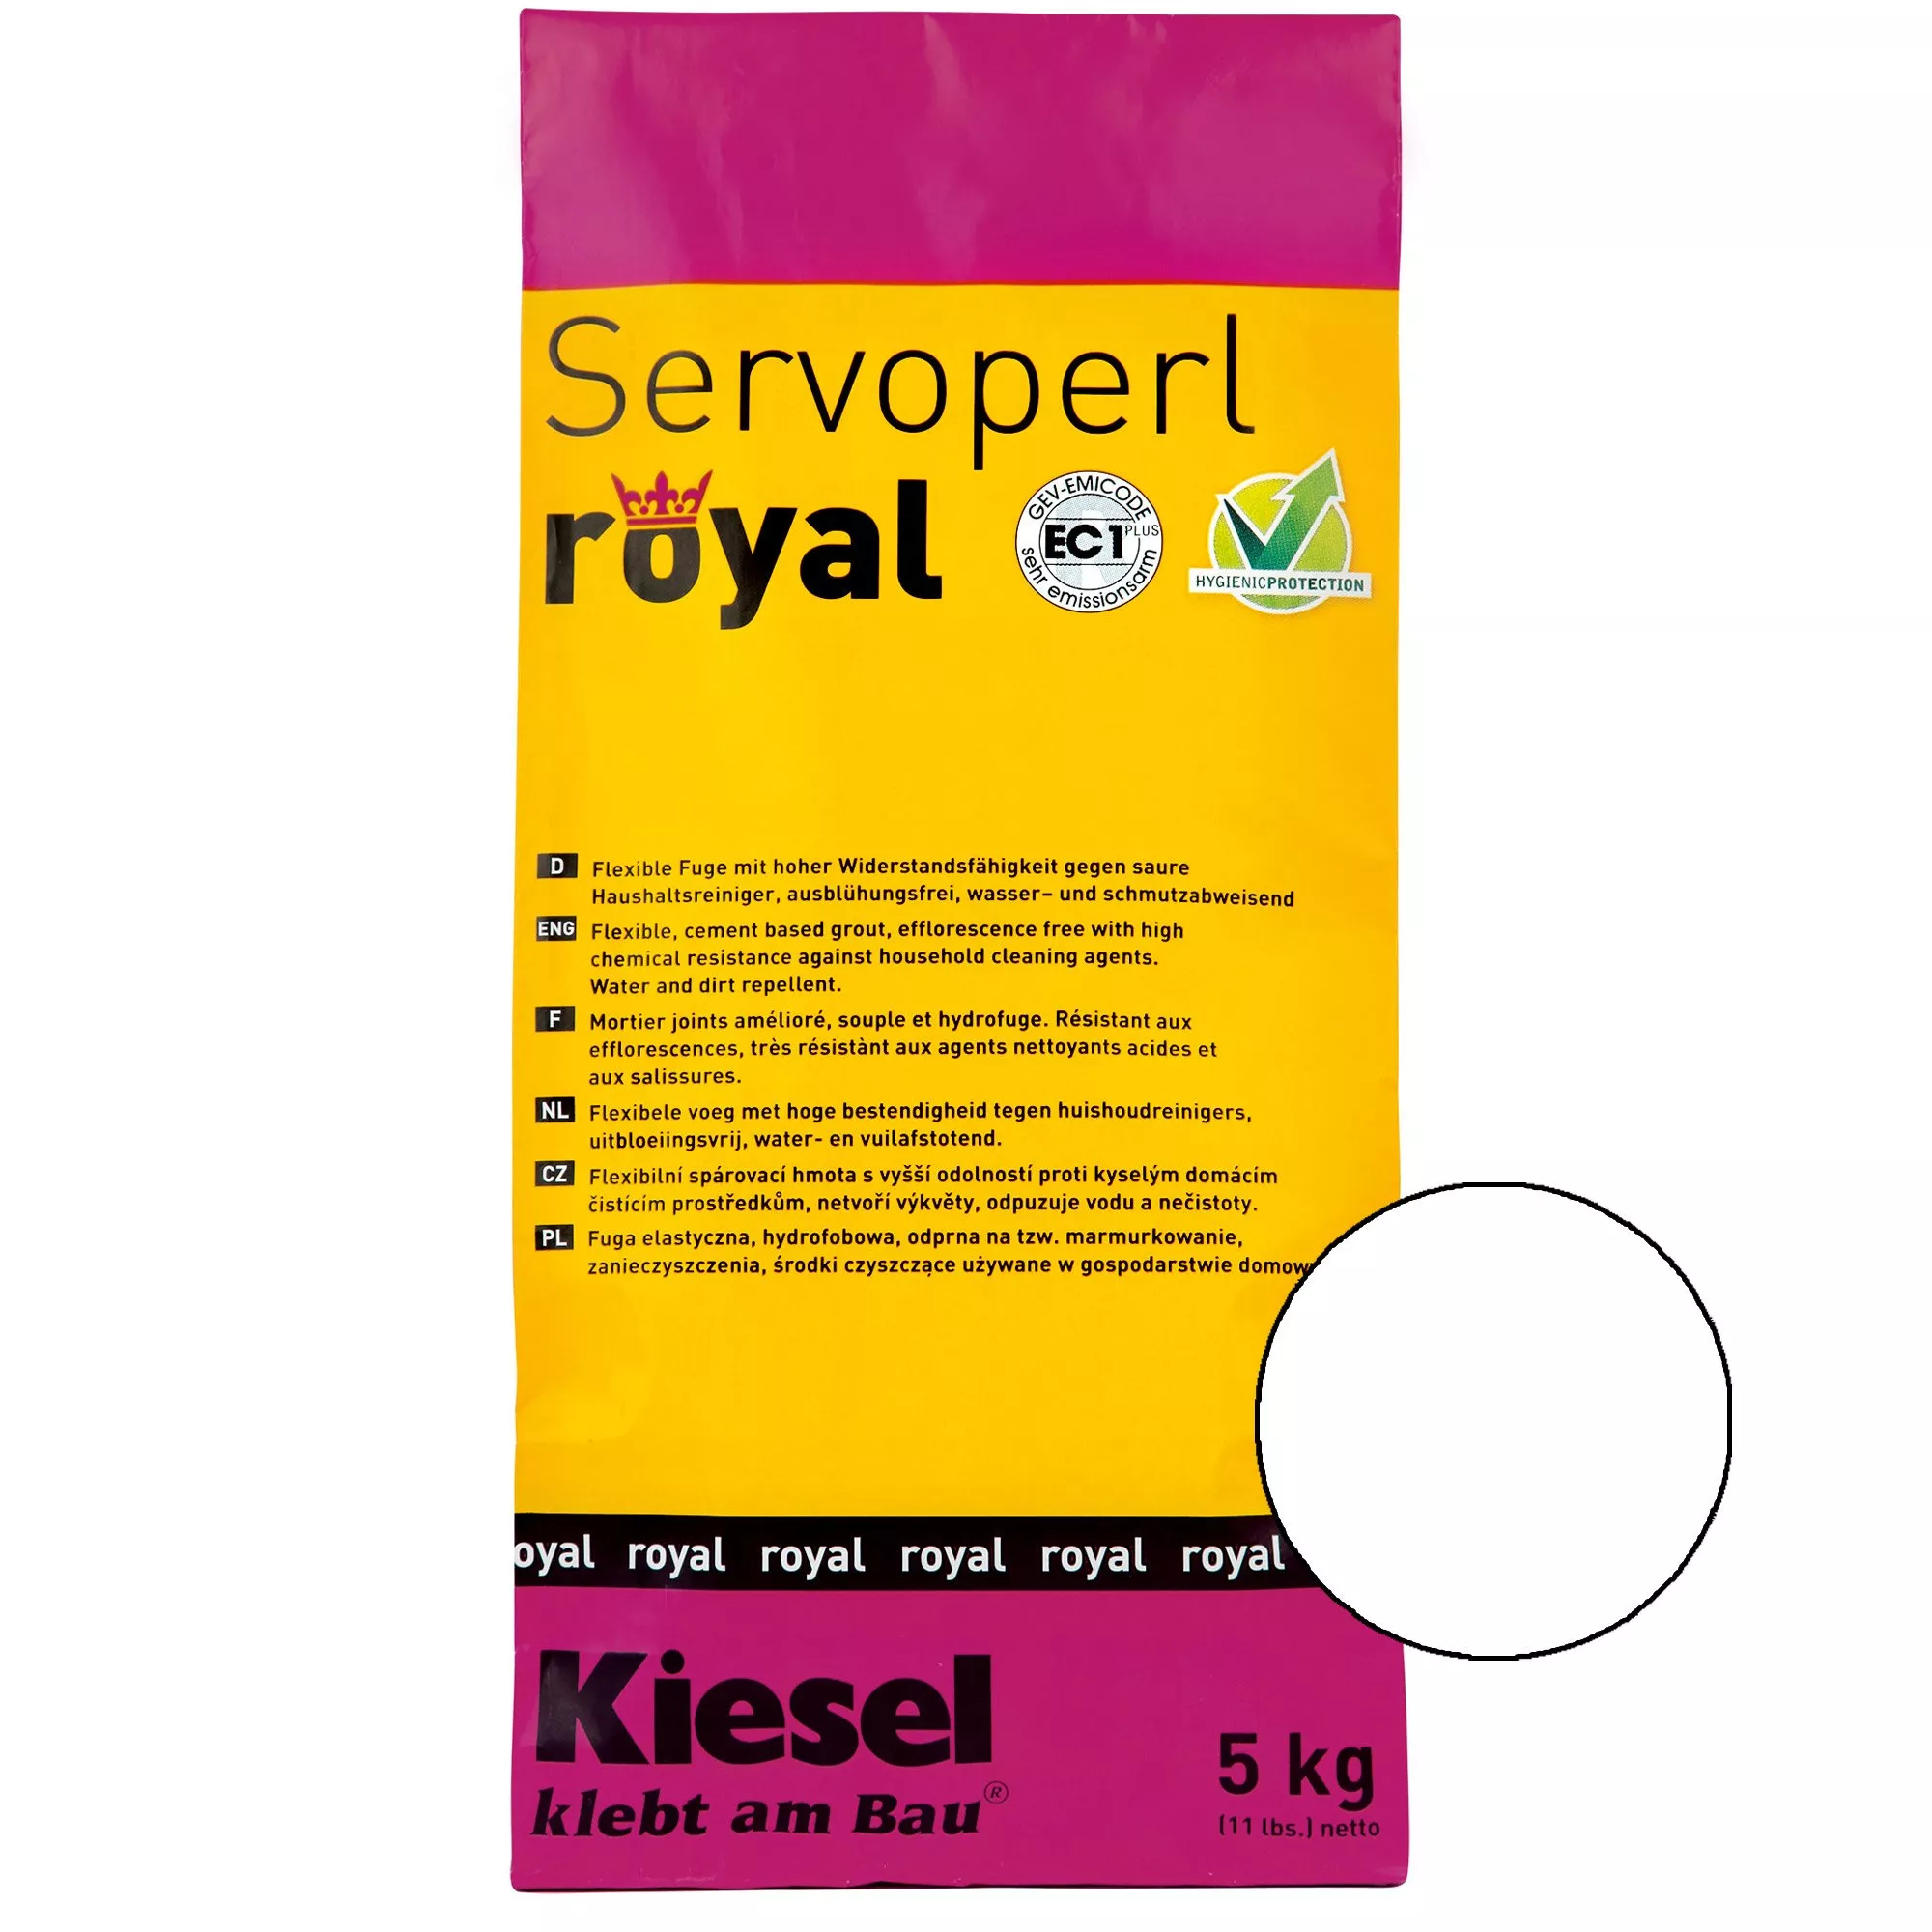 Kiesel Servoperl royal - flexible, water- and dirt-repellent joint (5KG white)